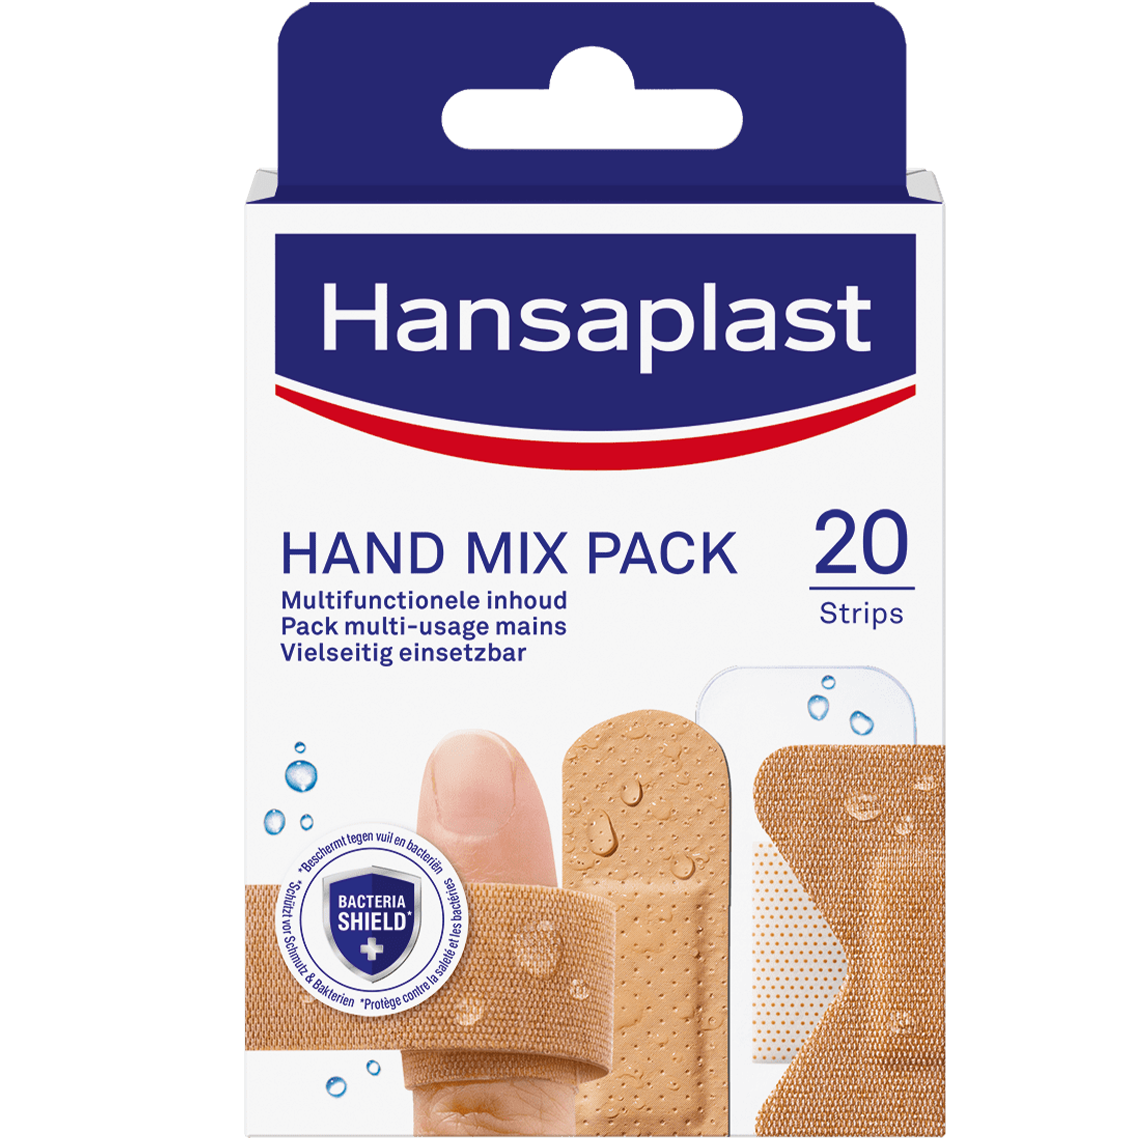 Handmix Pack 20 Strips